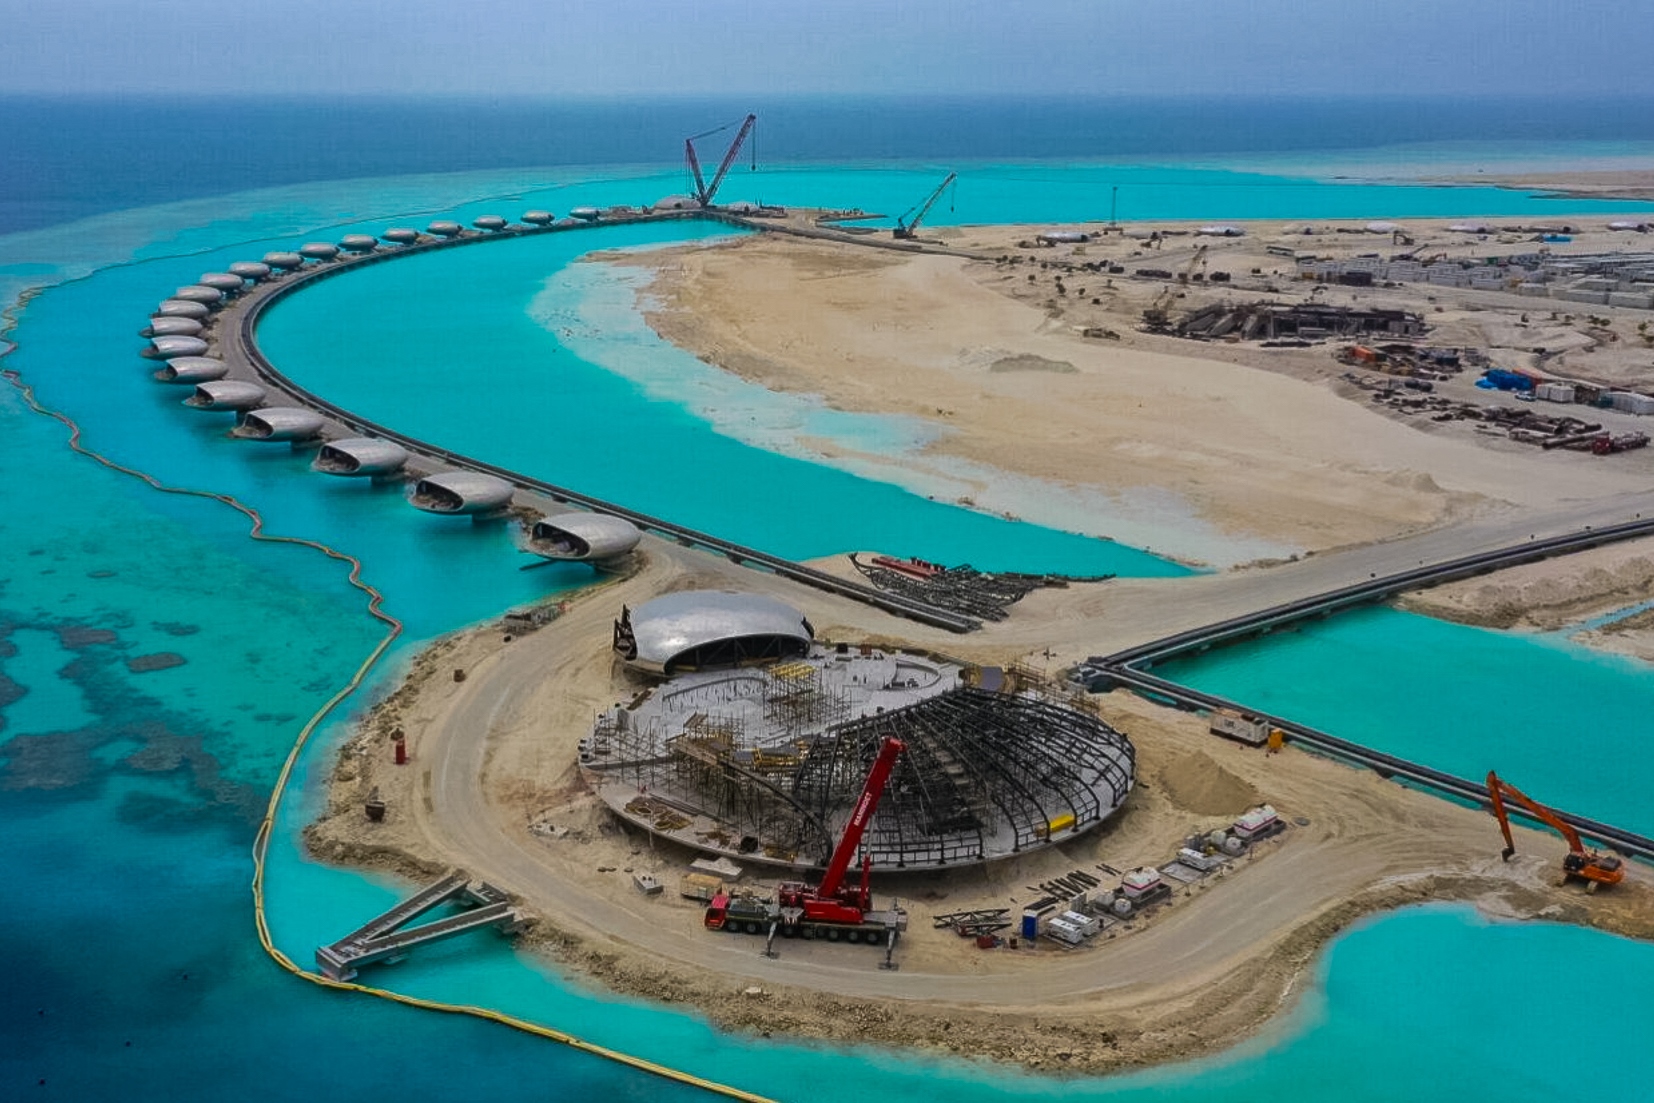 Red Sea resort takes shape